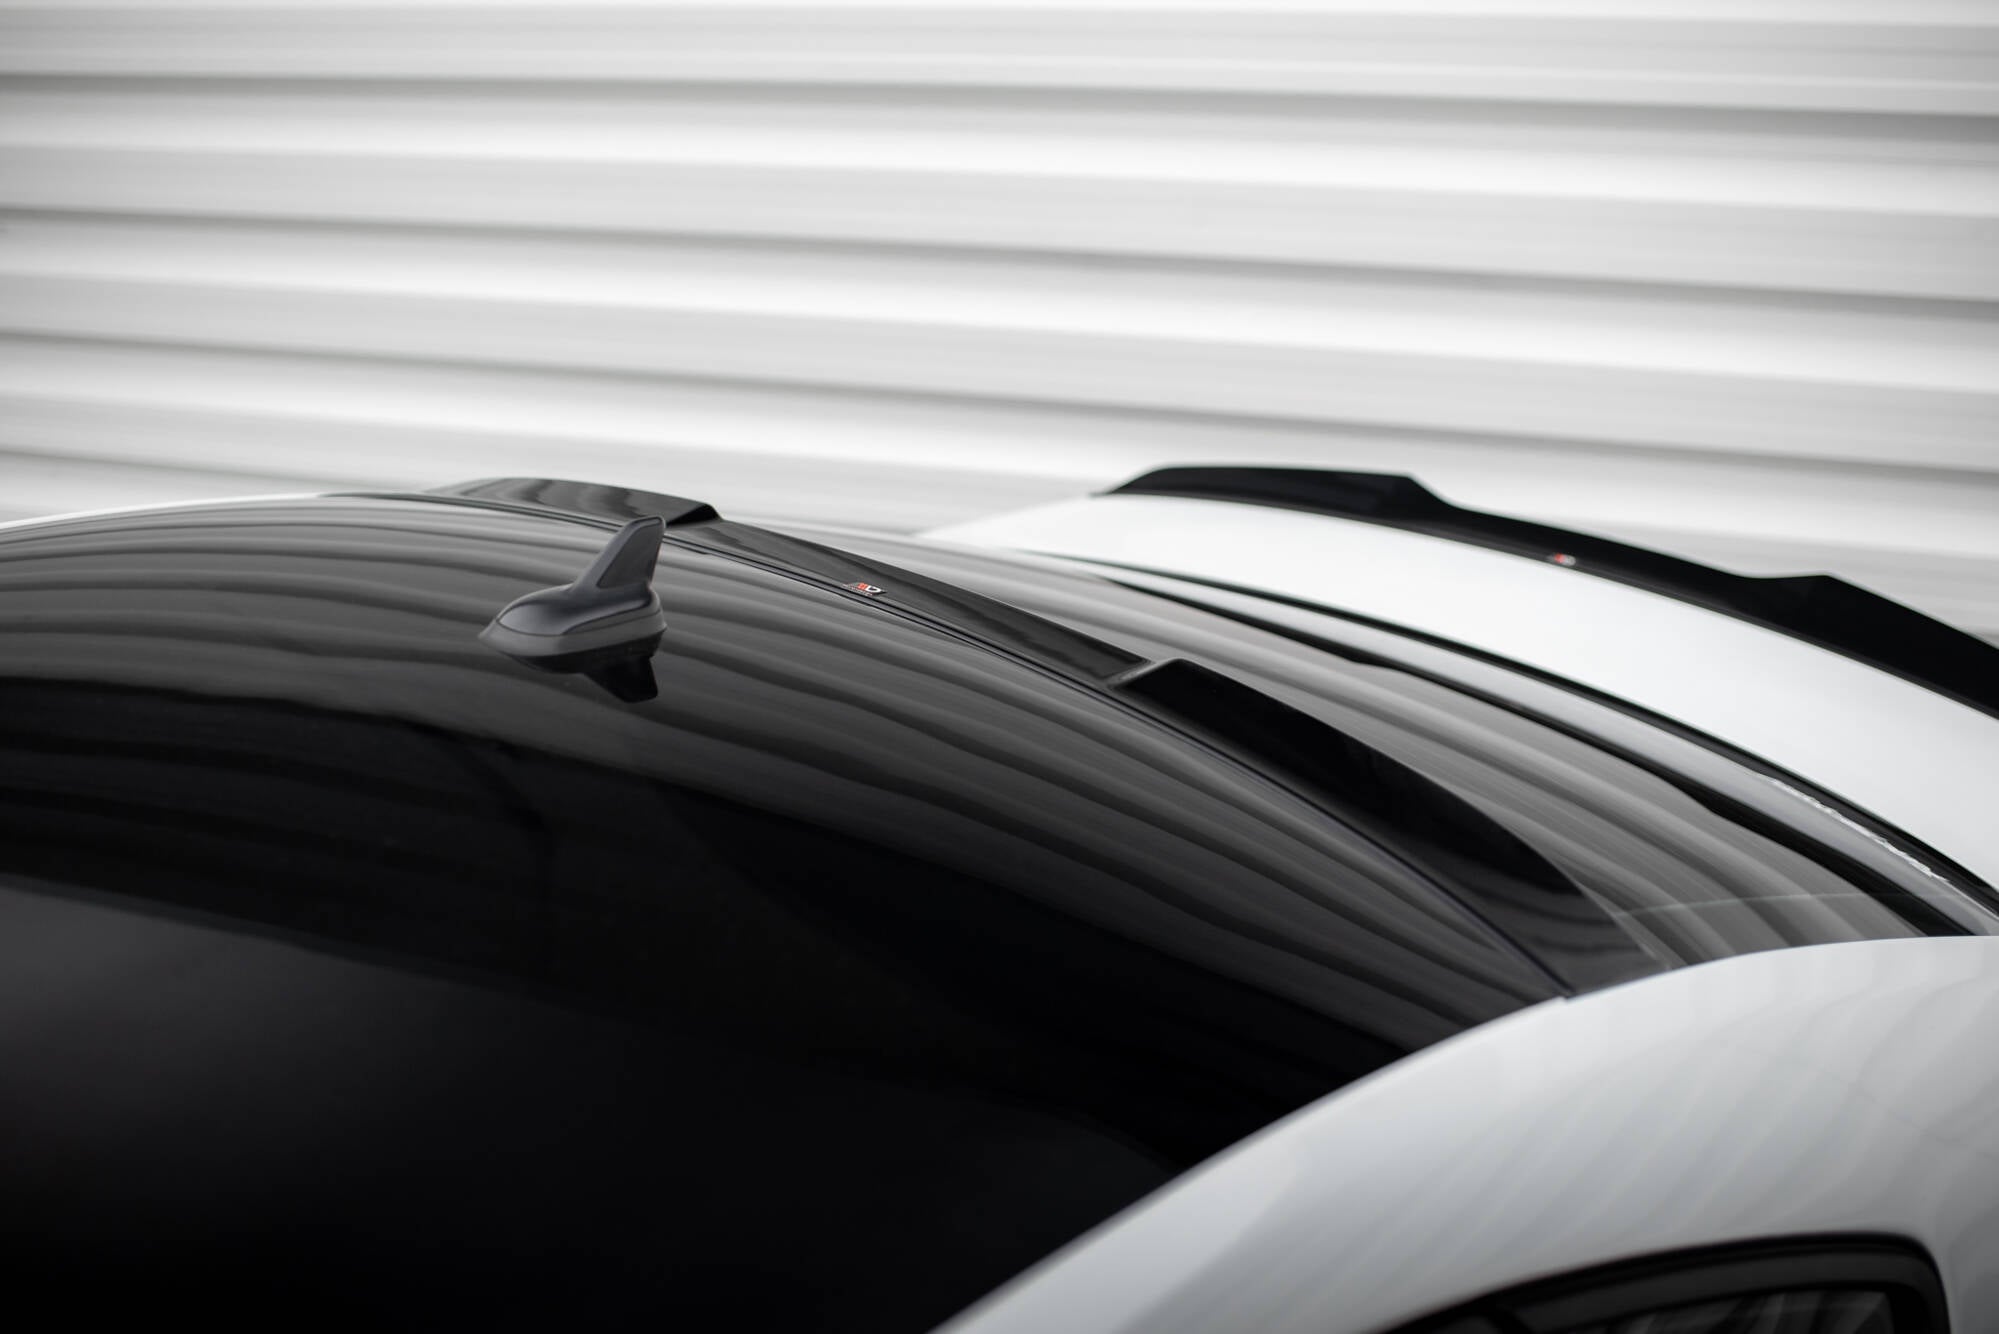 The extension of the rear window Volkswagen Passat GT B8 Facelift USA